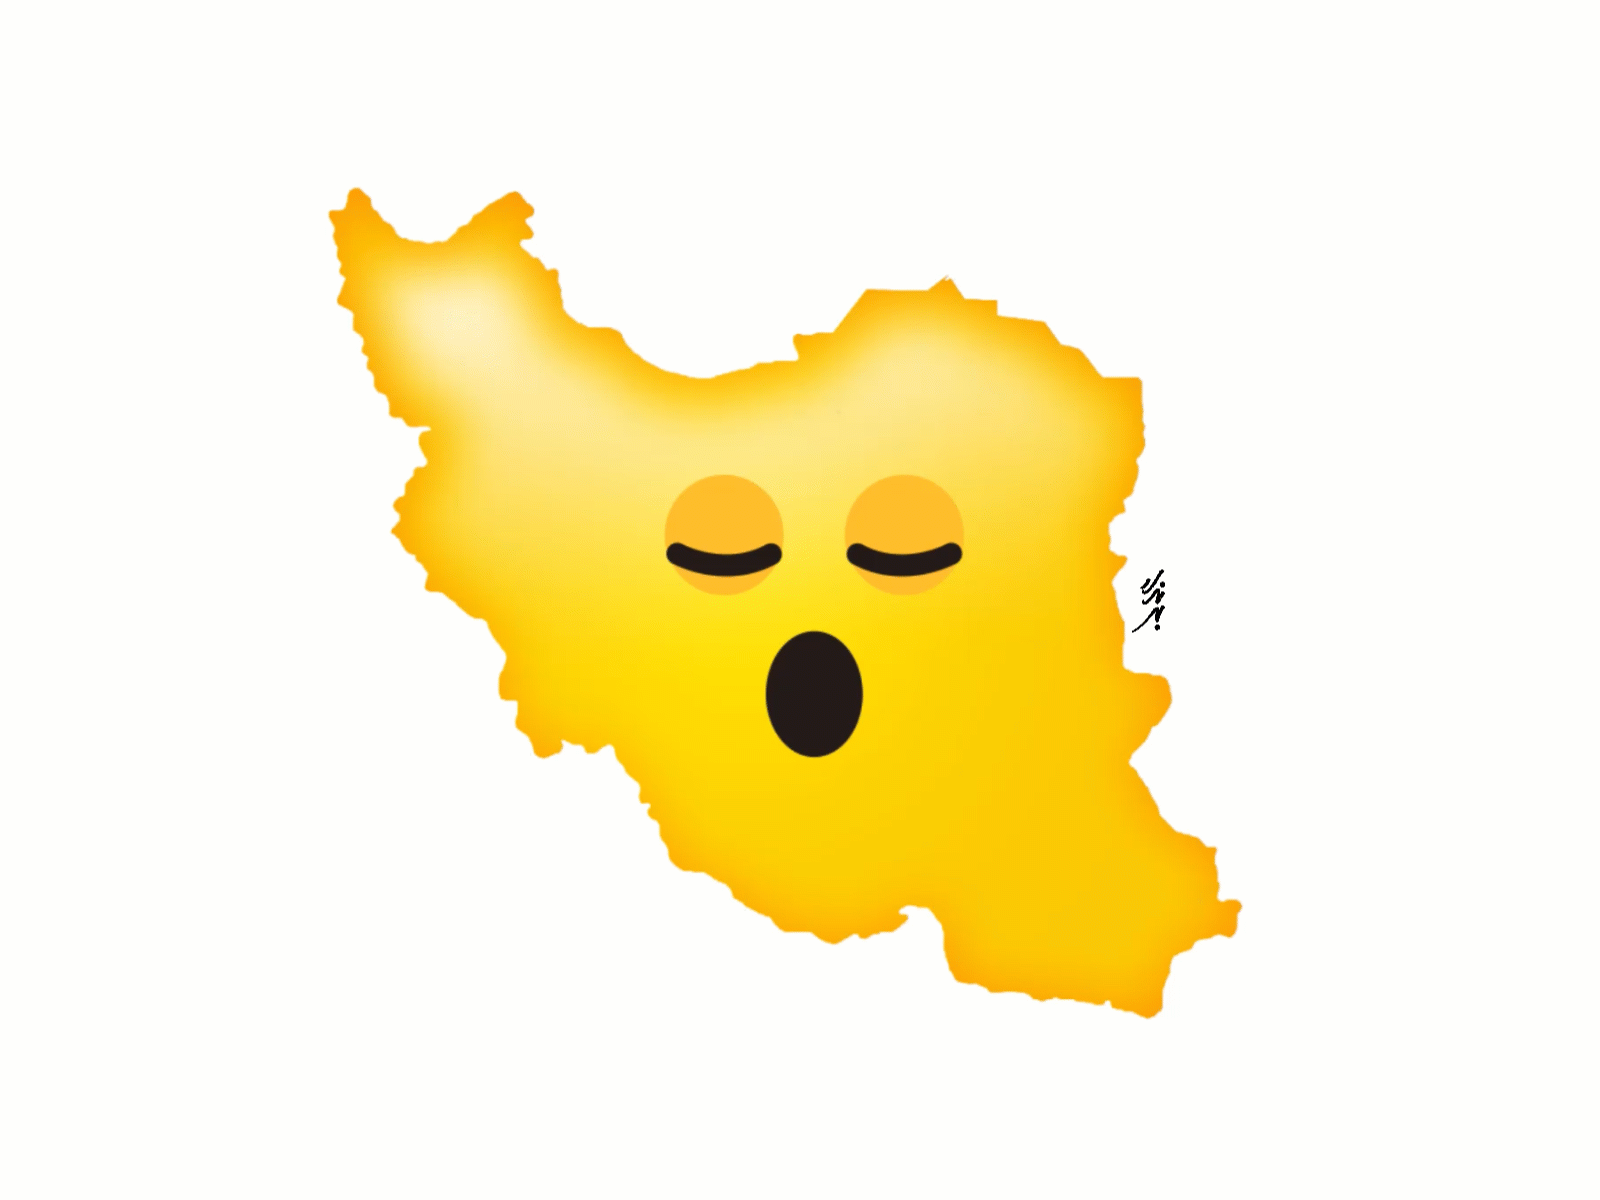 IRAN design emoji gif gif animation graphic iran sleep